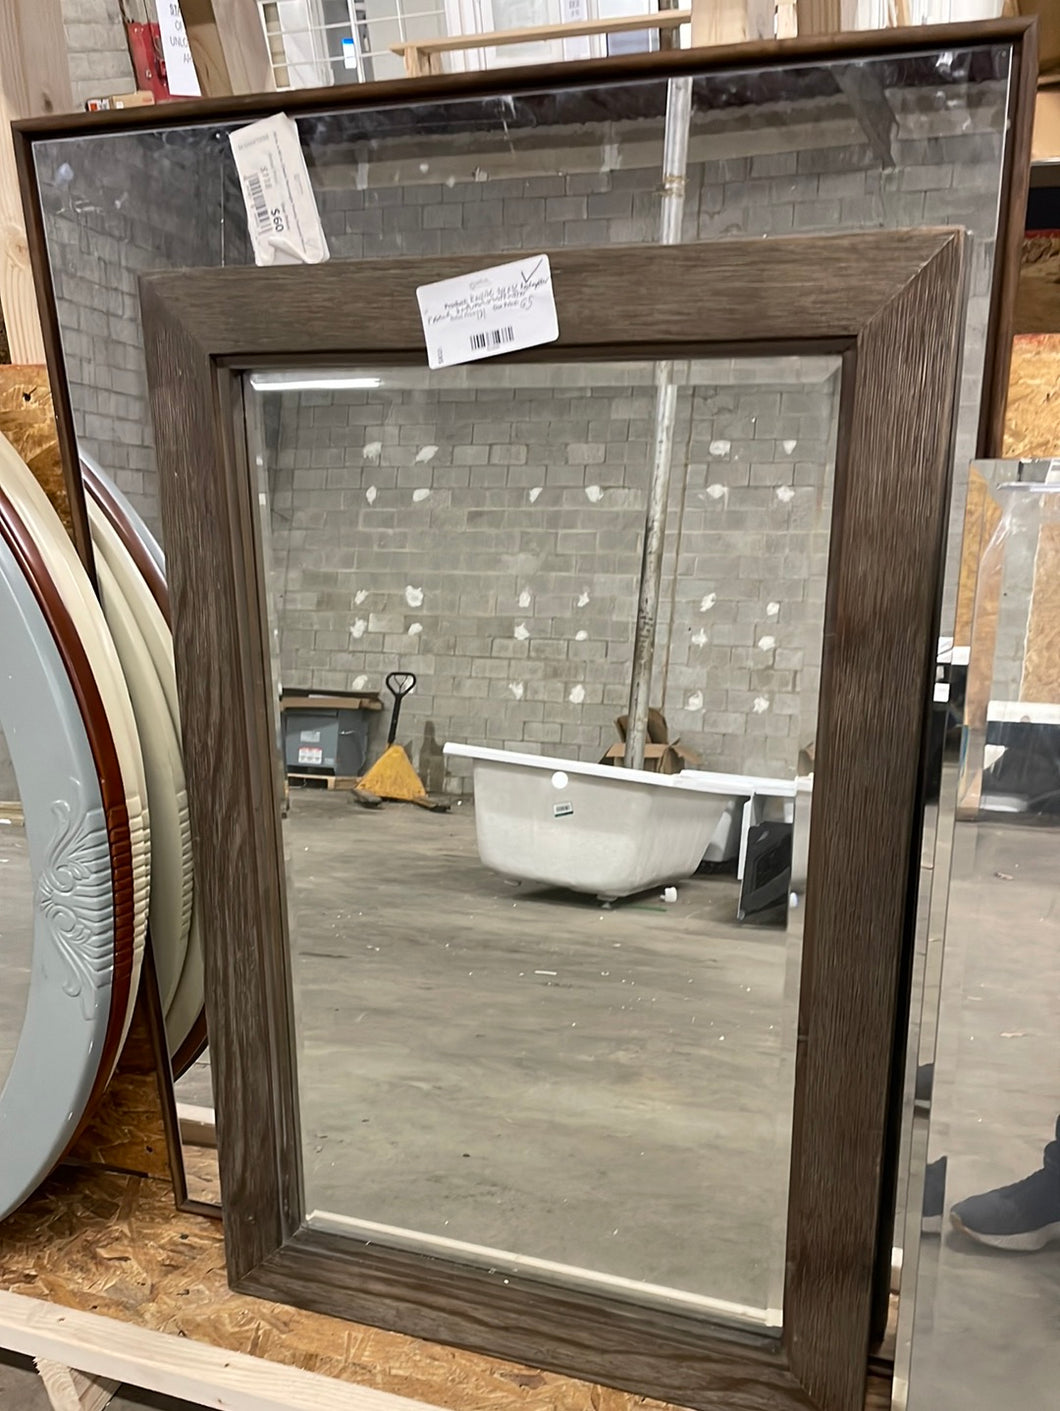 Kordite 24x32 rectangular framed bathroom vanity mirror in charcoal